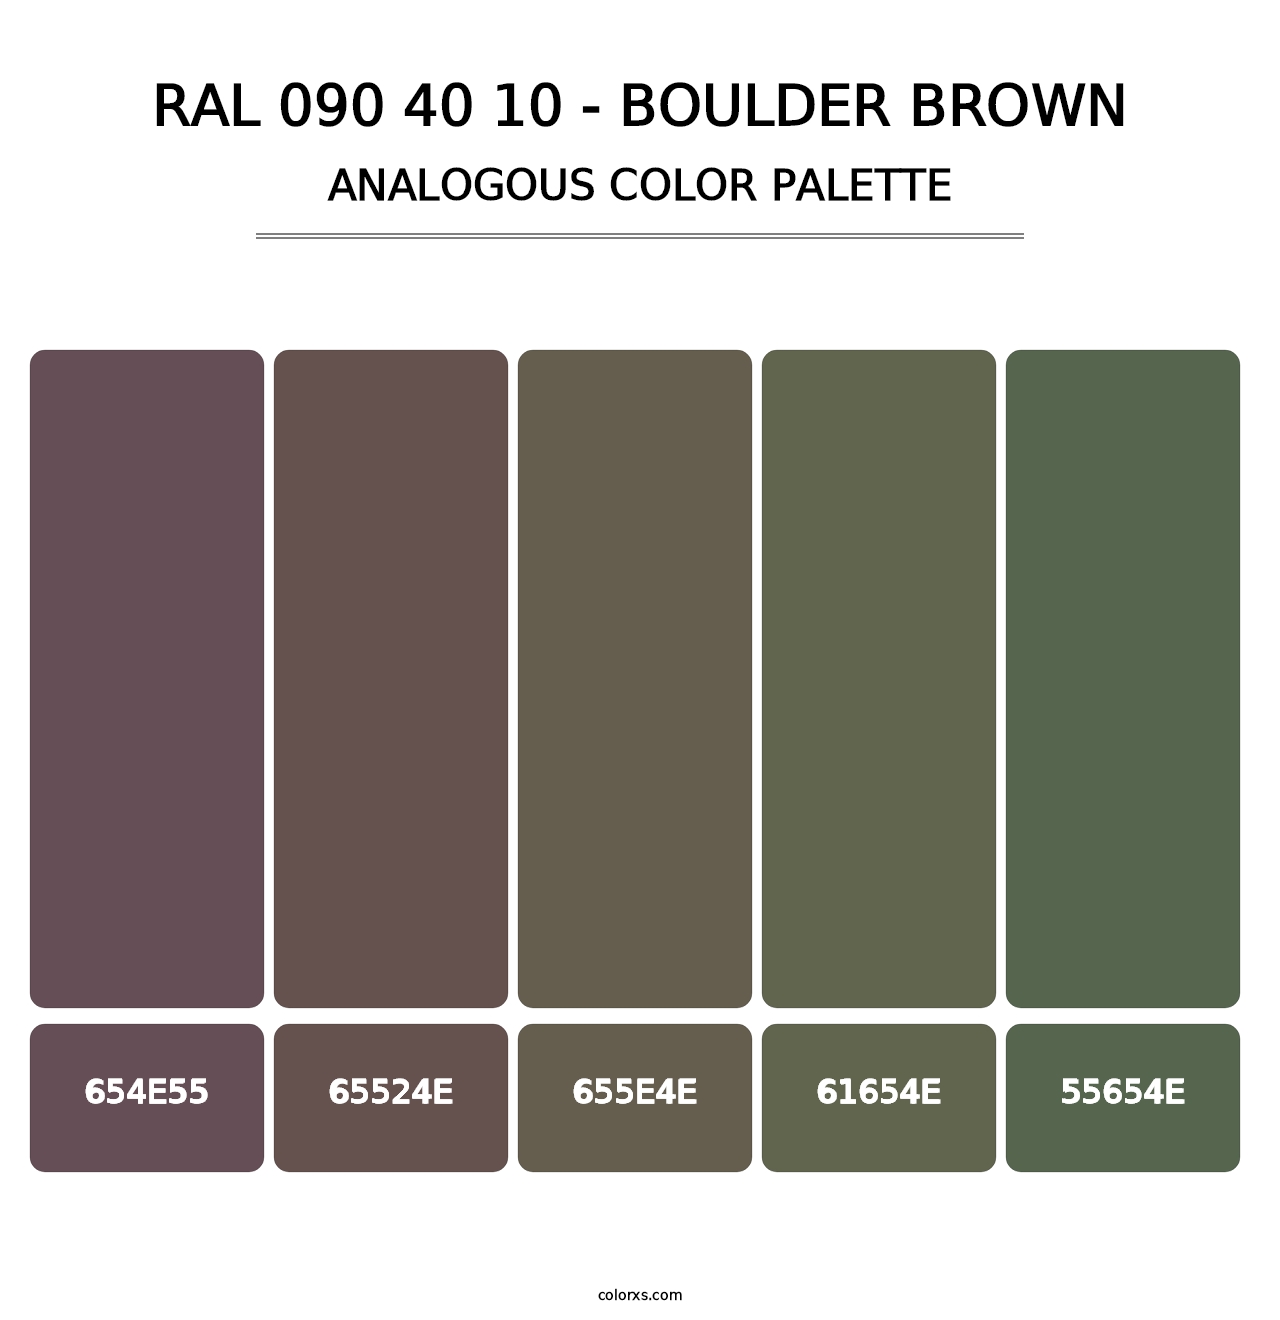 RAL 090 40 10 - Boulder Brown - Analogous Color Palette